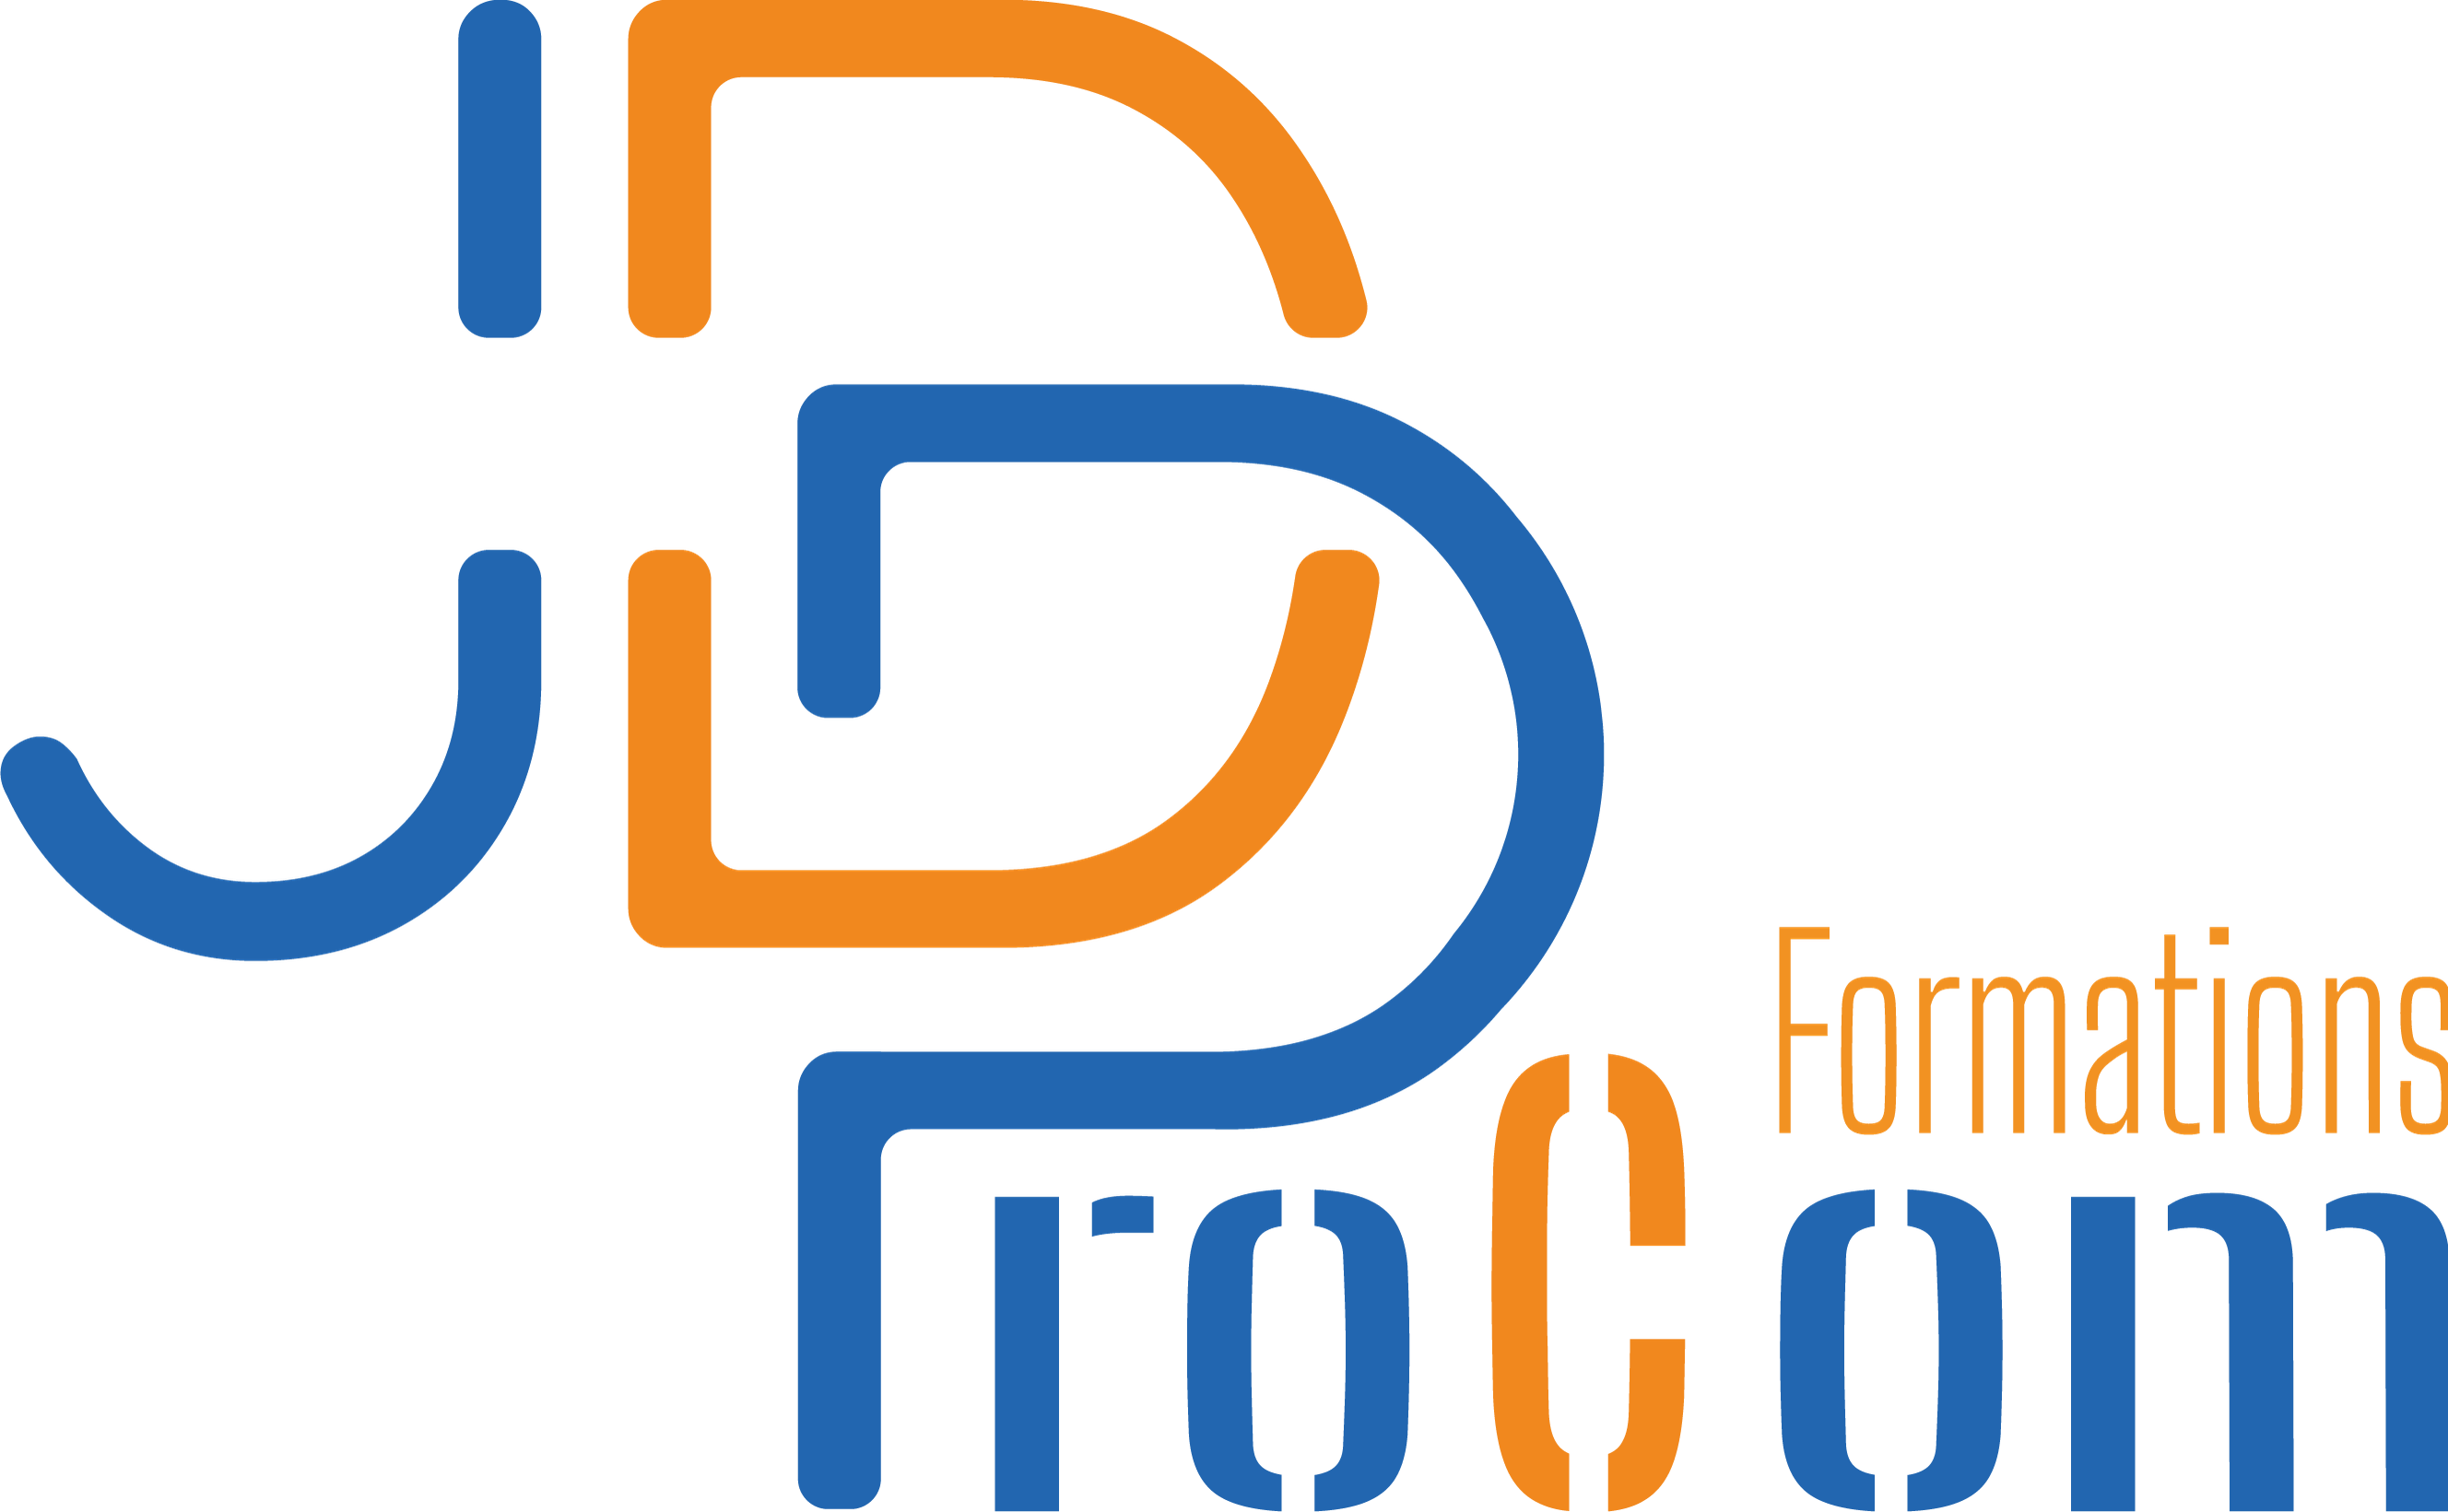 logo JD Procom Formations écrit en orange et bleui